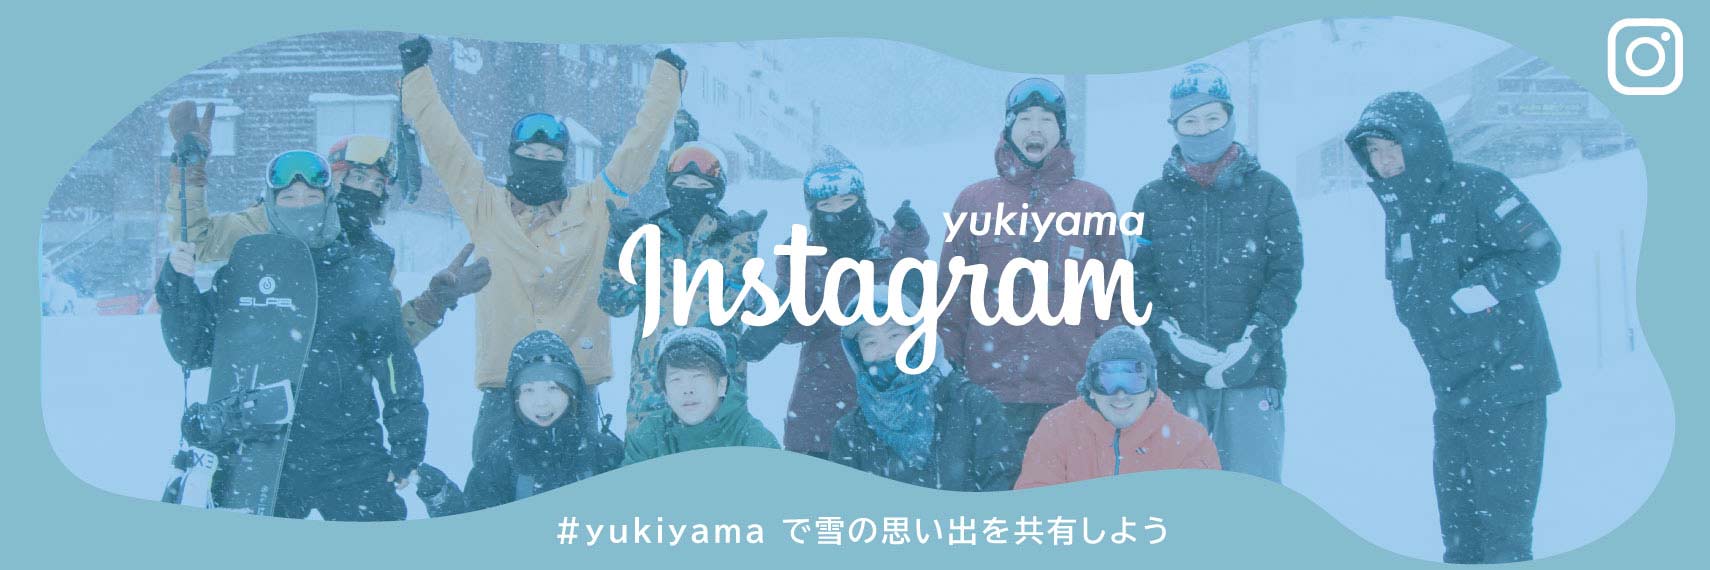 yukiyama Instagramページはこちら